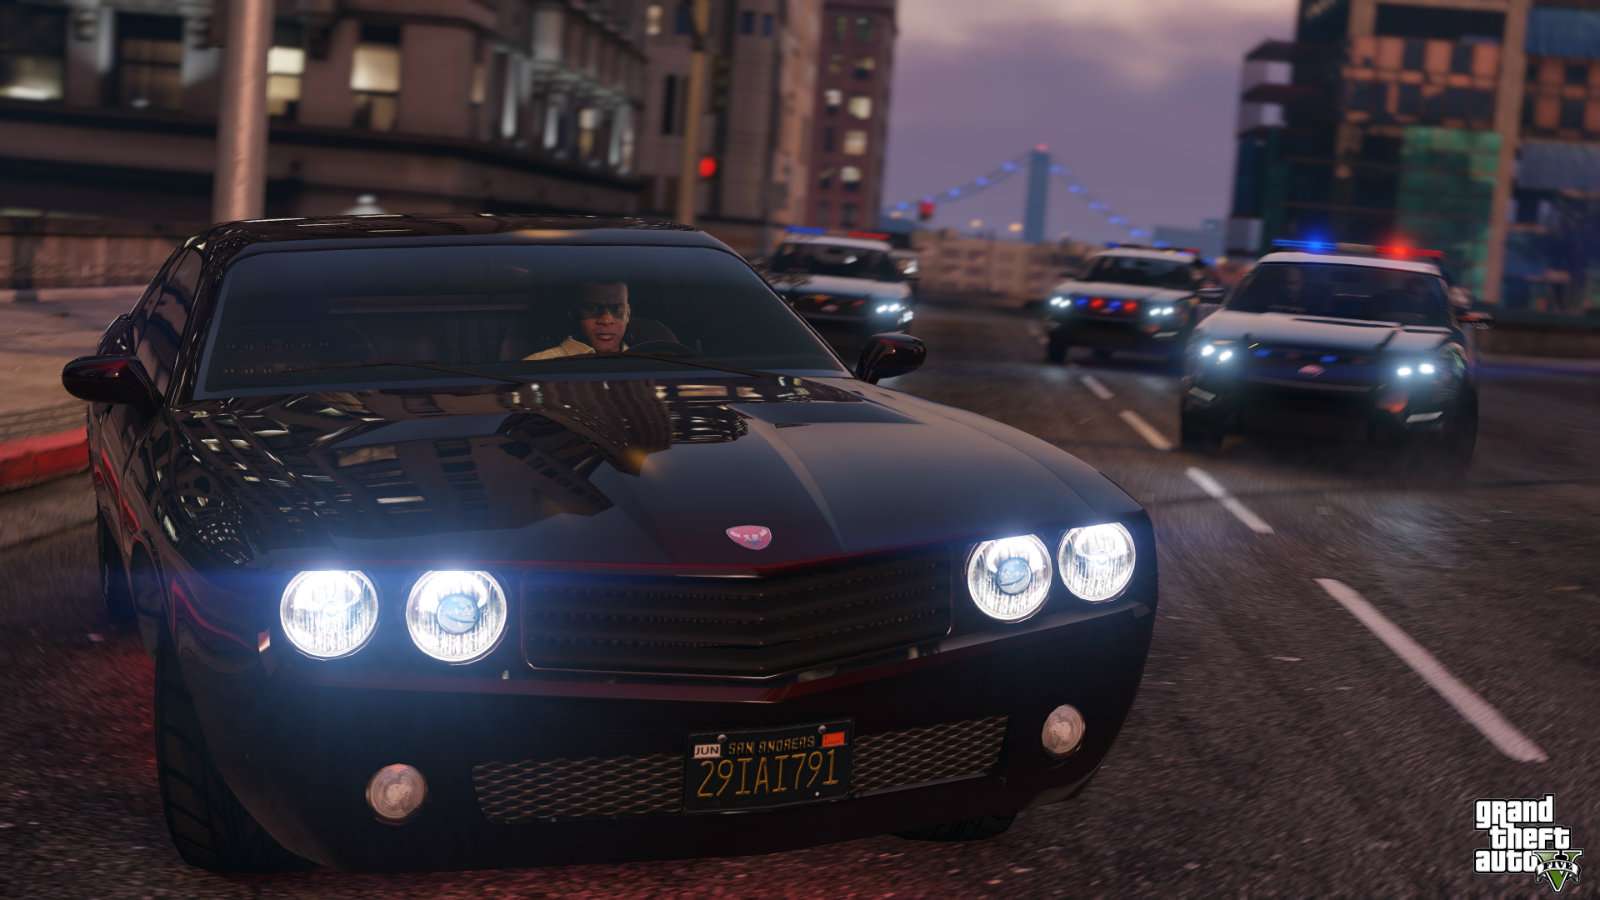 Franklyn speeds away from police in GTA V